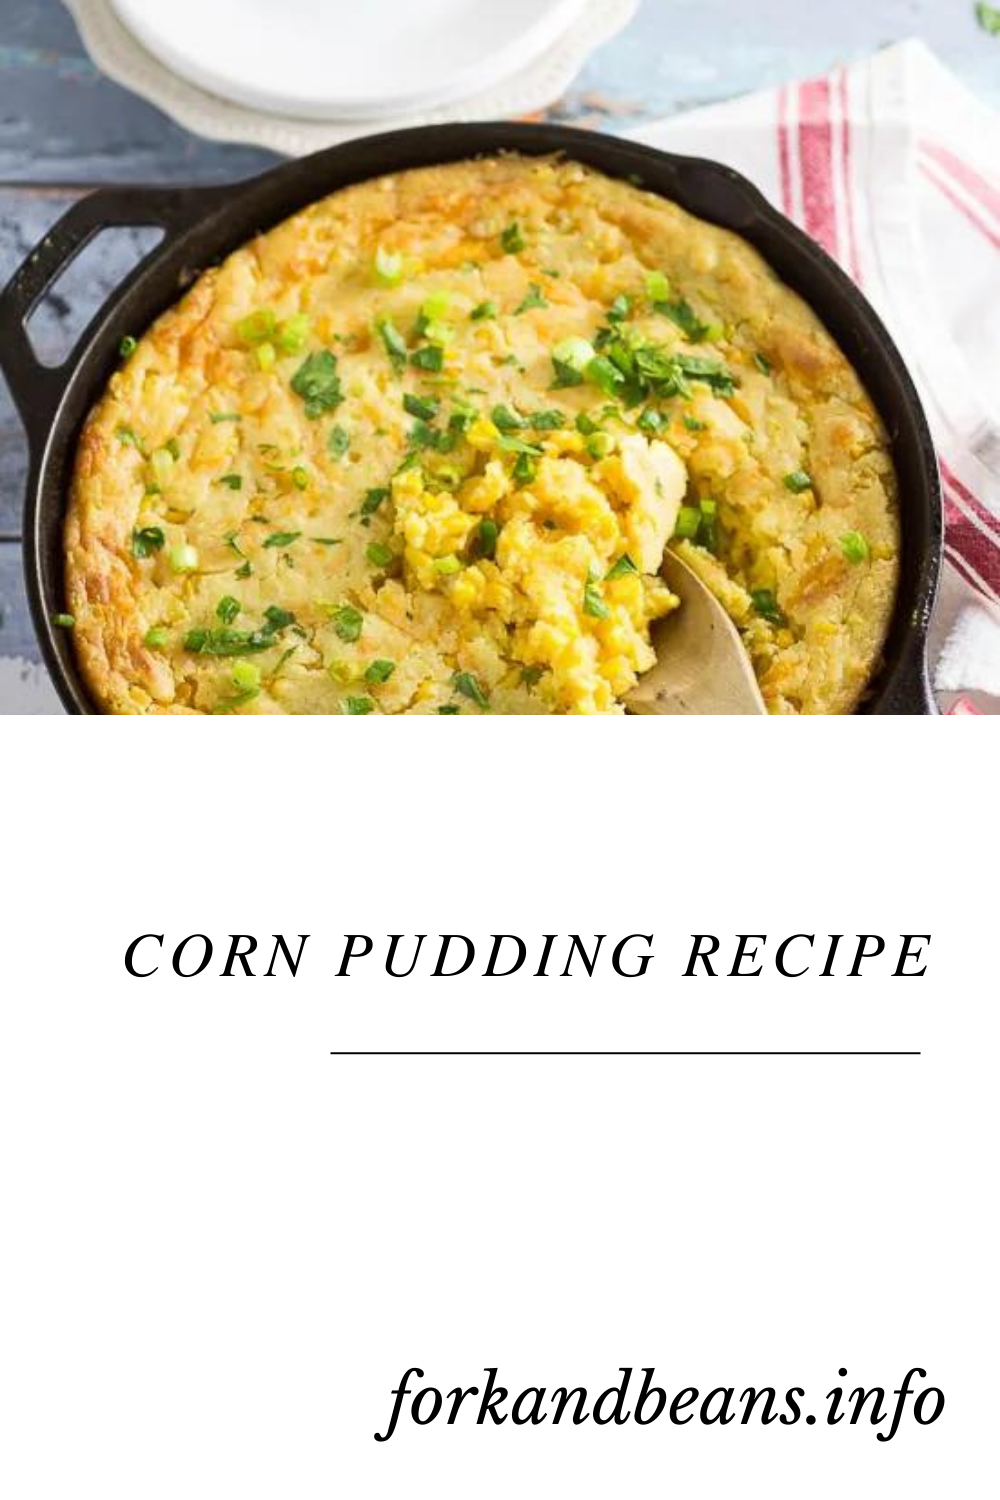 Carolina Corn Pudding